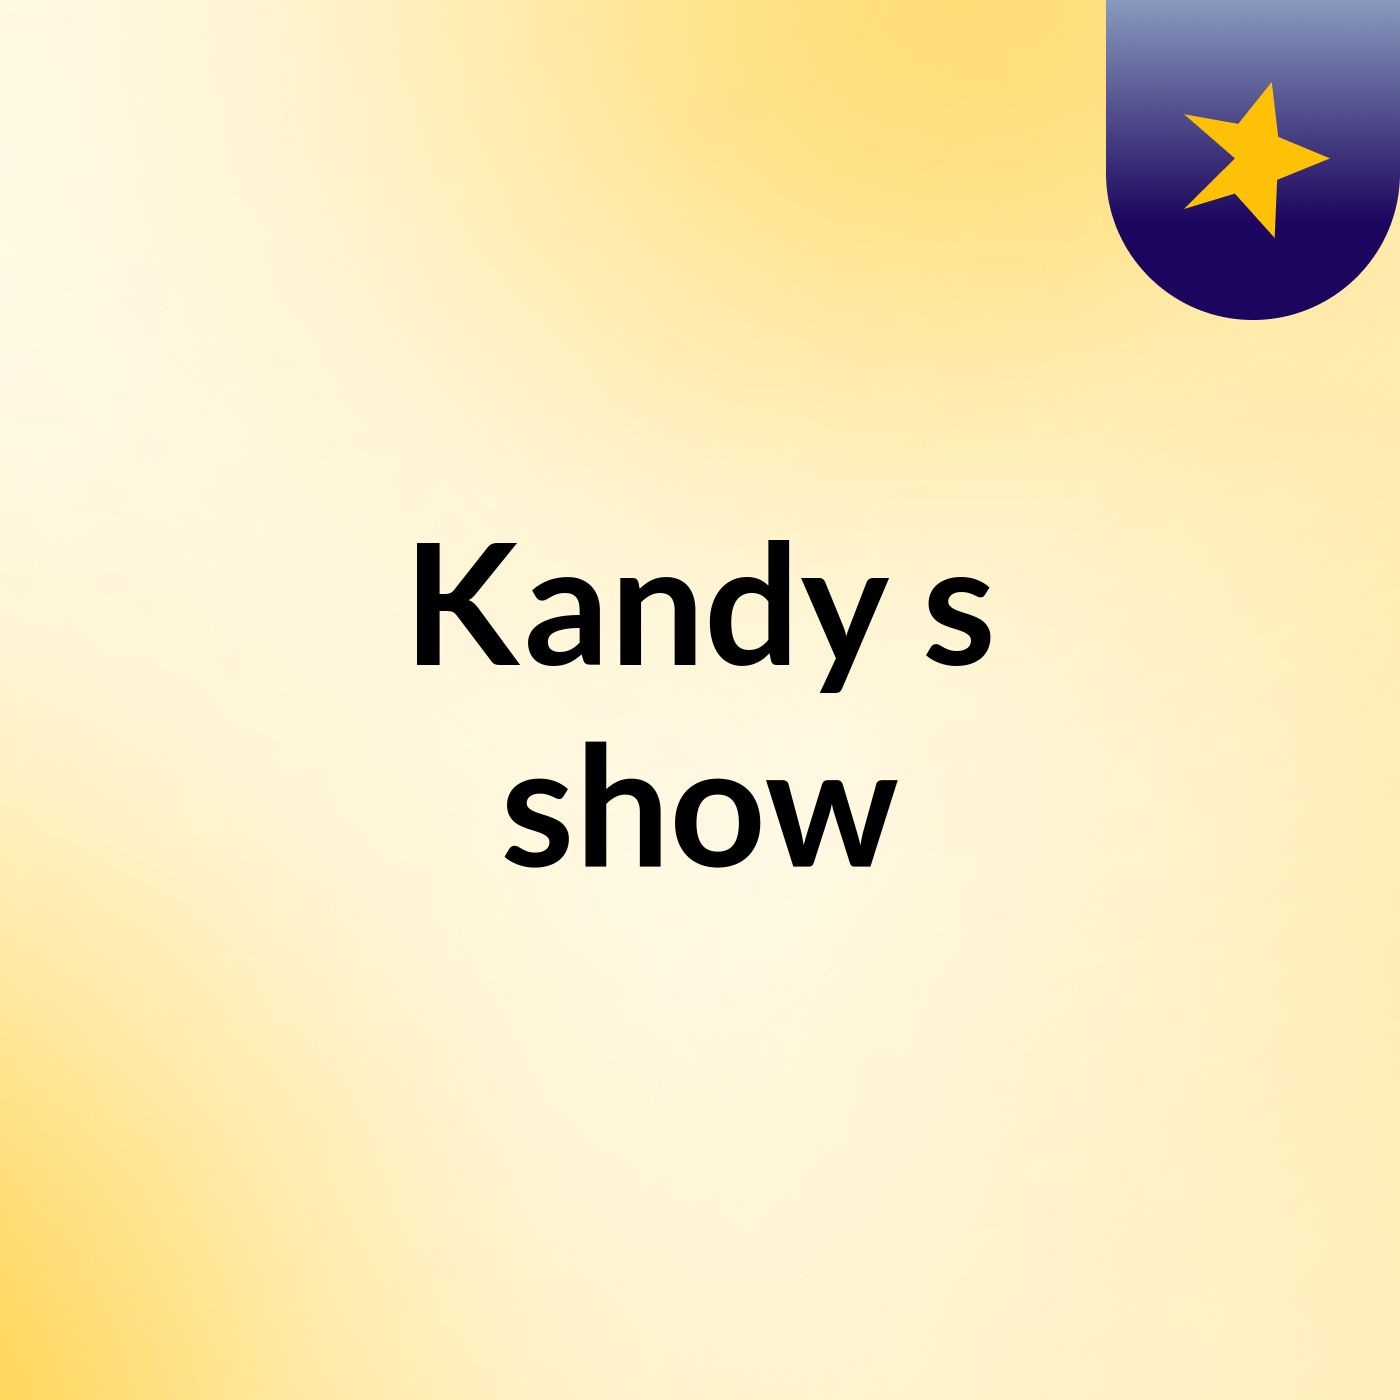 Kandy's show